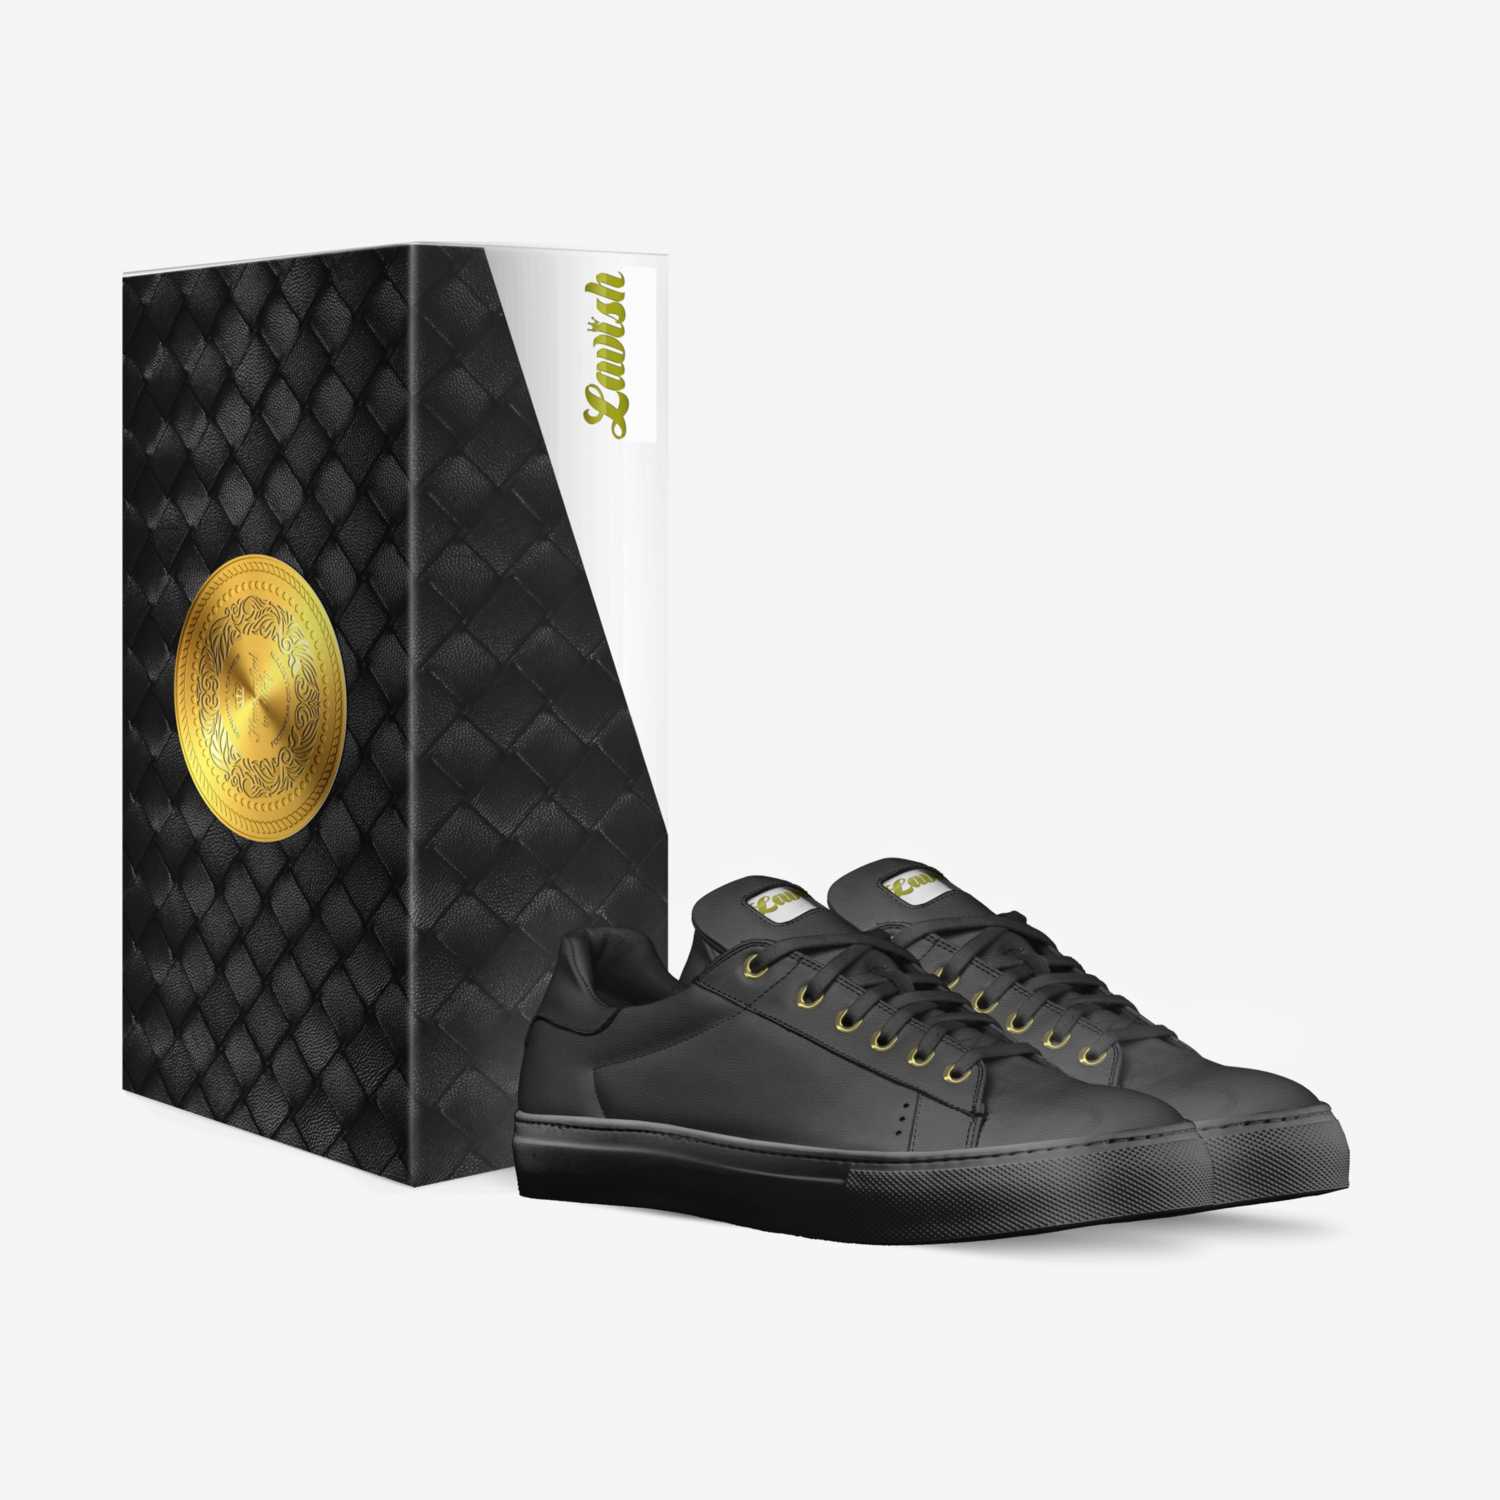 LAVISH custom made in Italy shoes by Priscilla Galanos | Box view